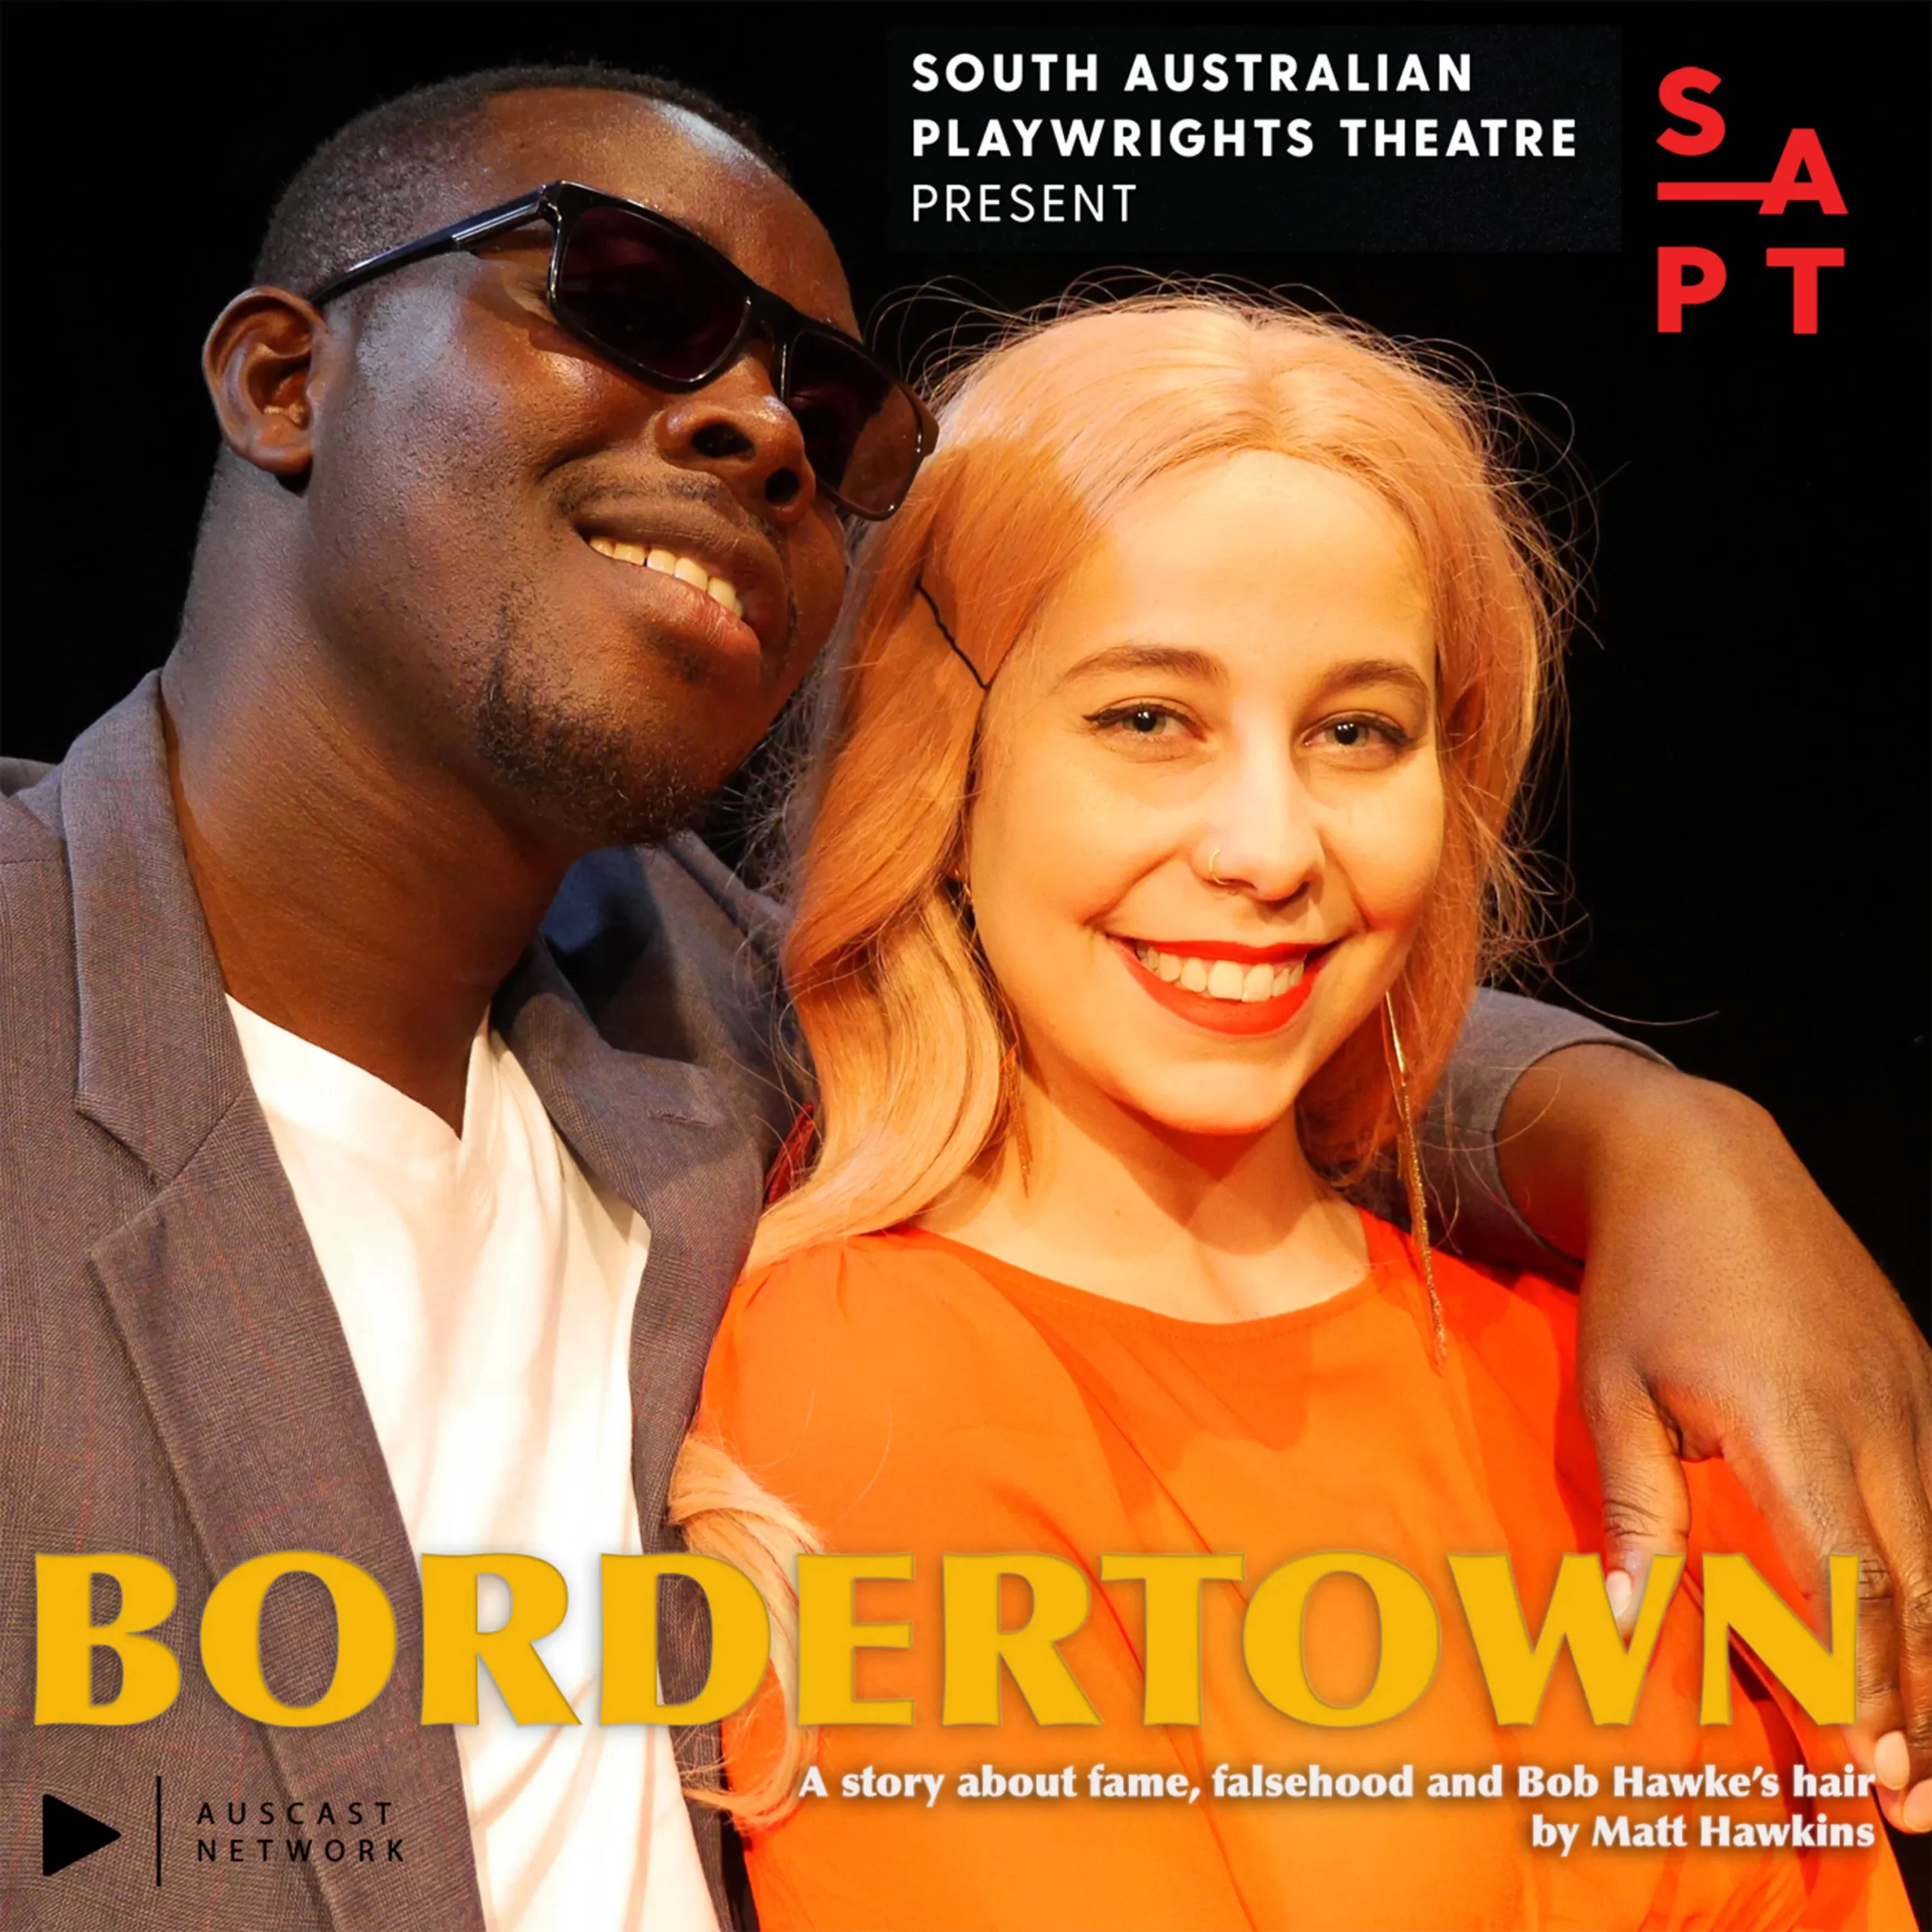 Bordertown by Matt Hawkins